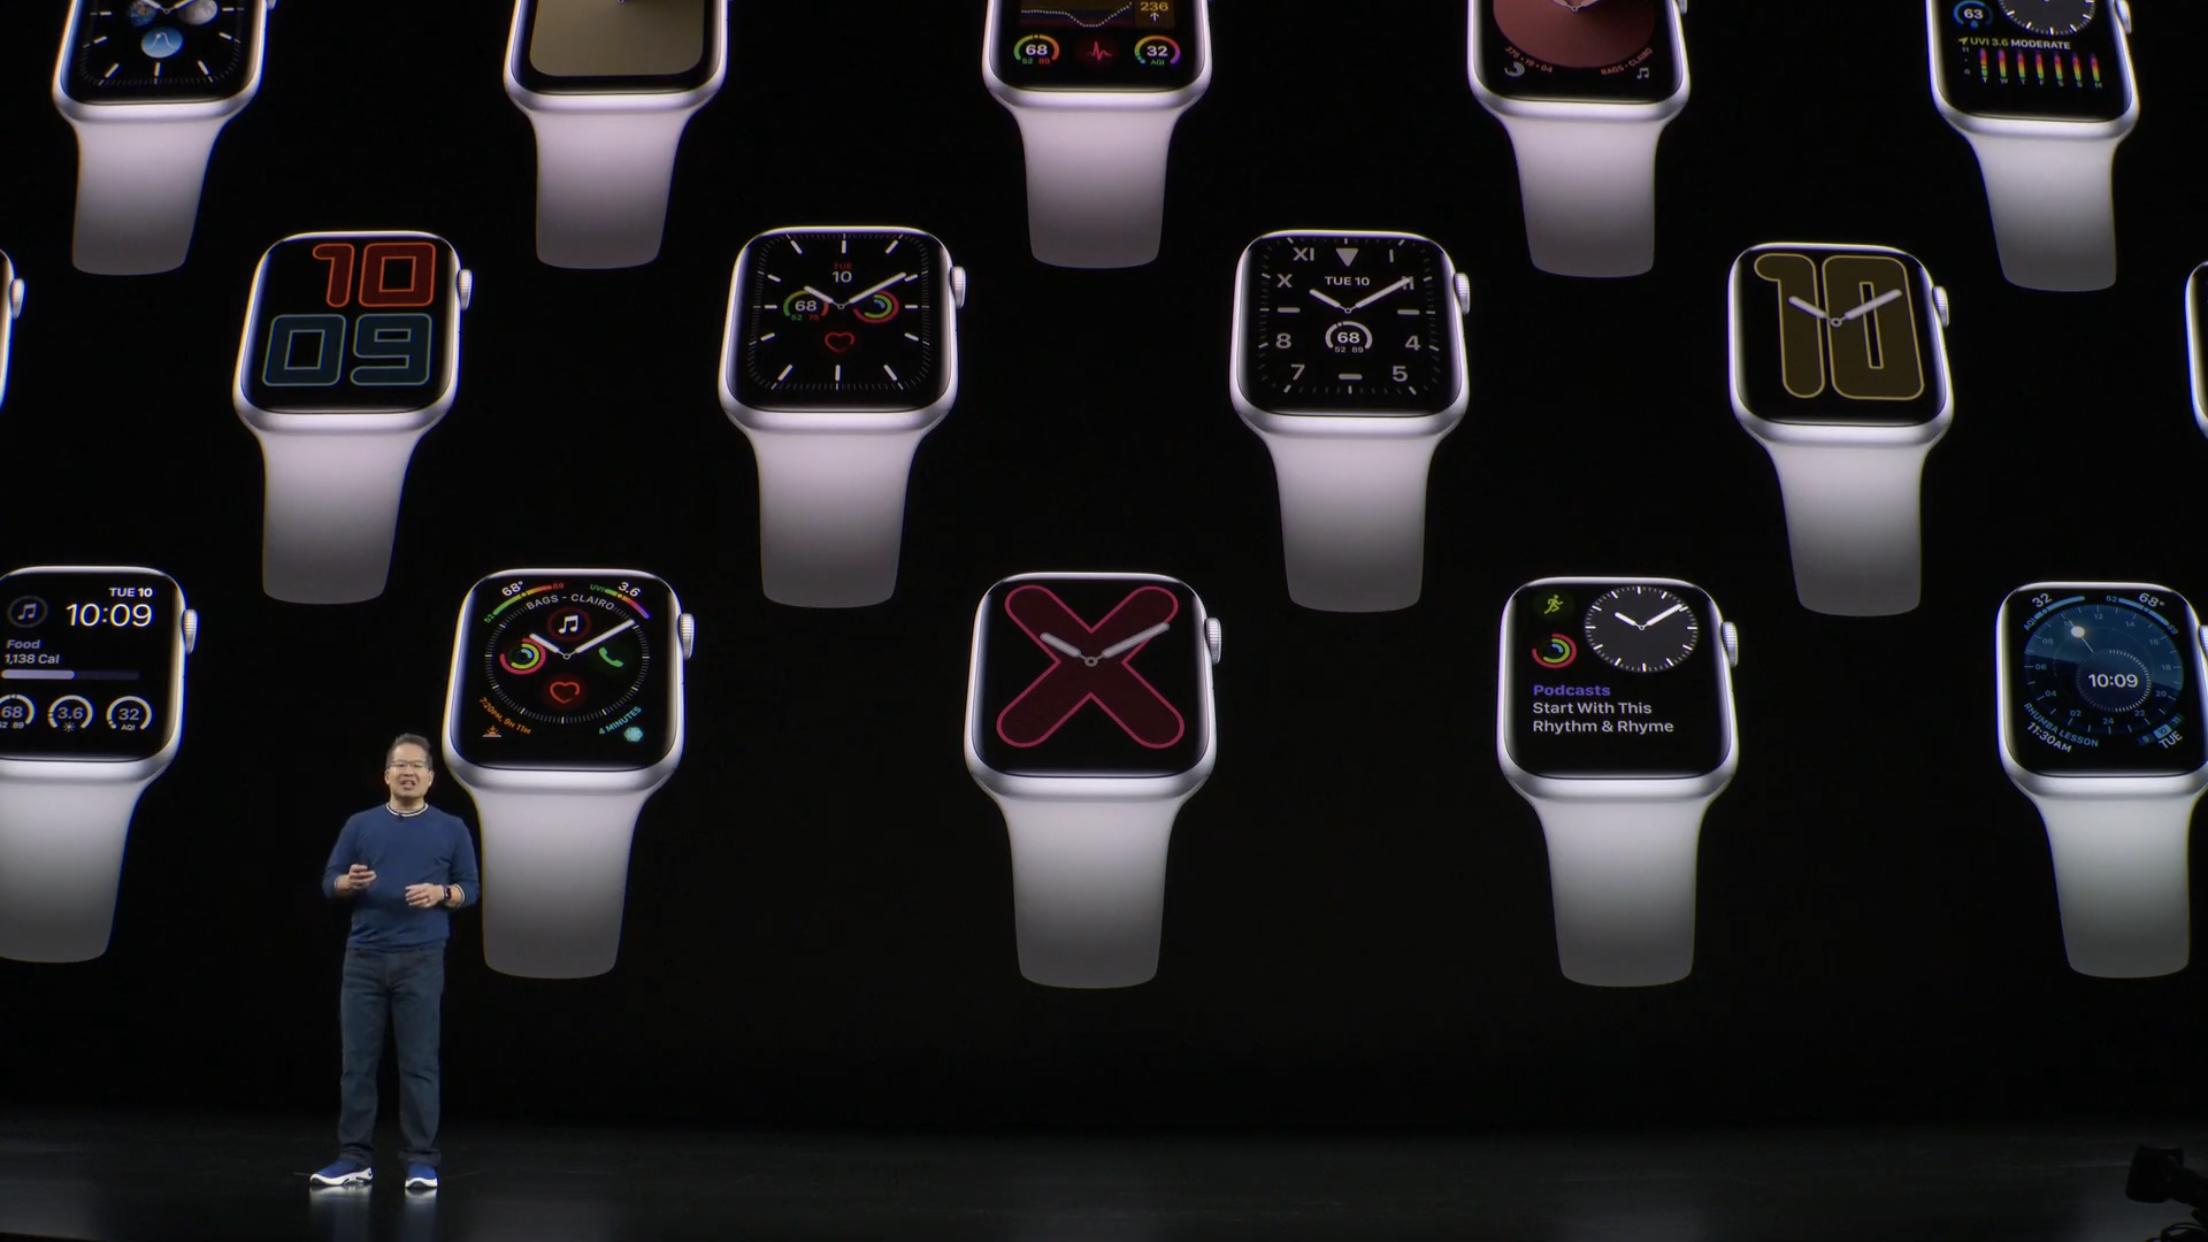 alt="Apple Watch Series 5"